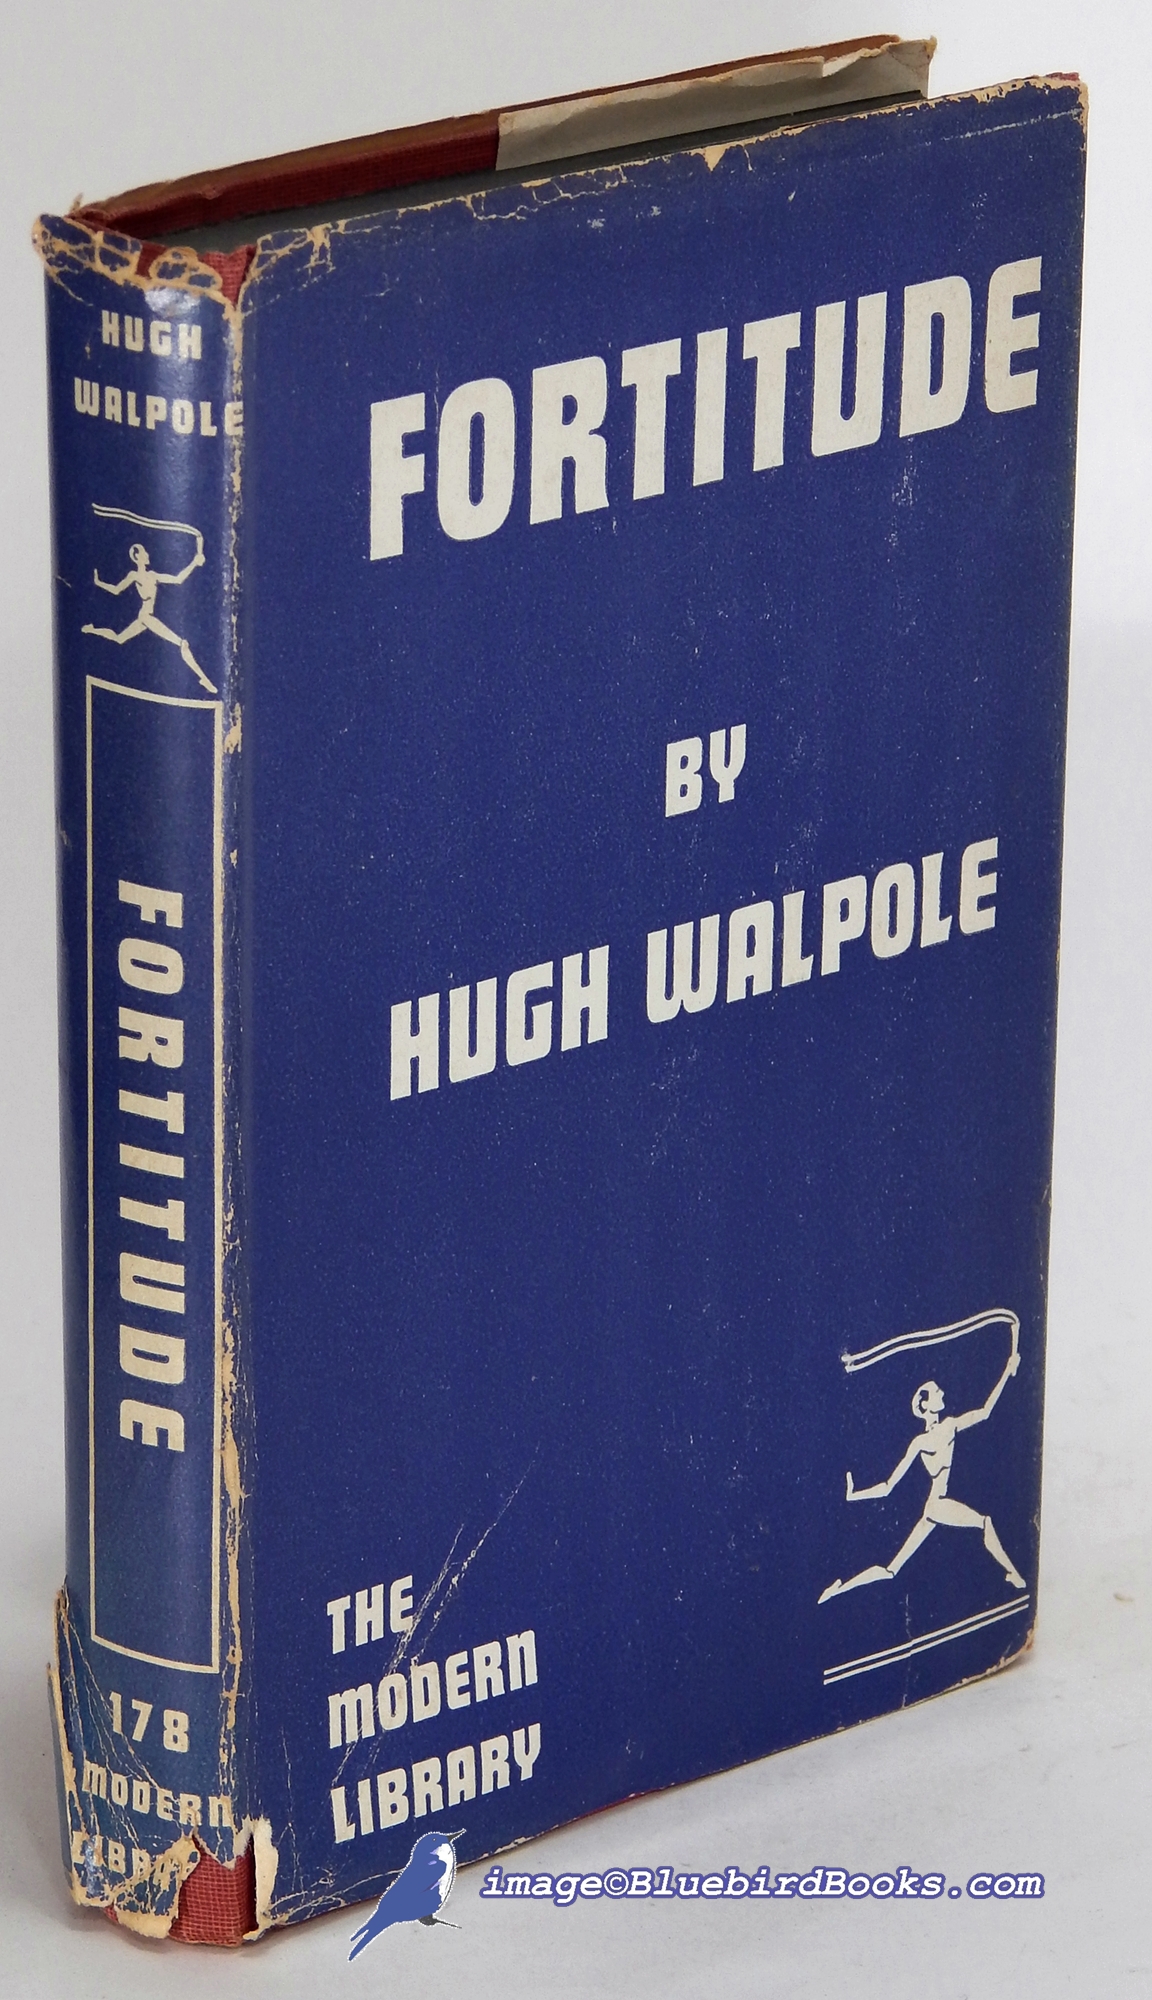 WALPOLE, HUGH - Fortitude (Modern Library #178. 1)